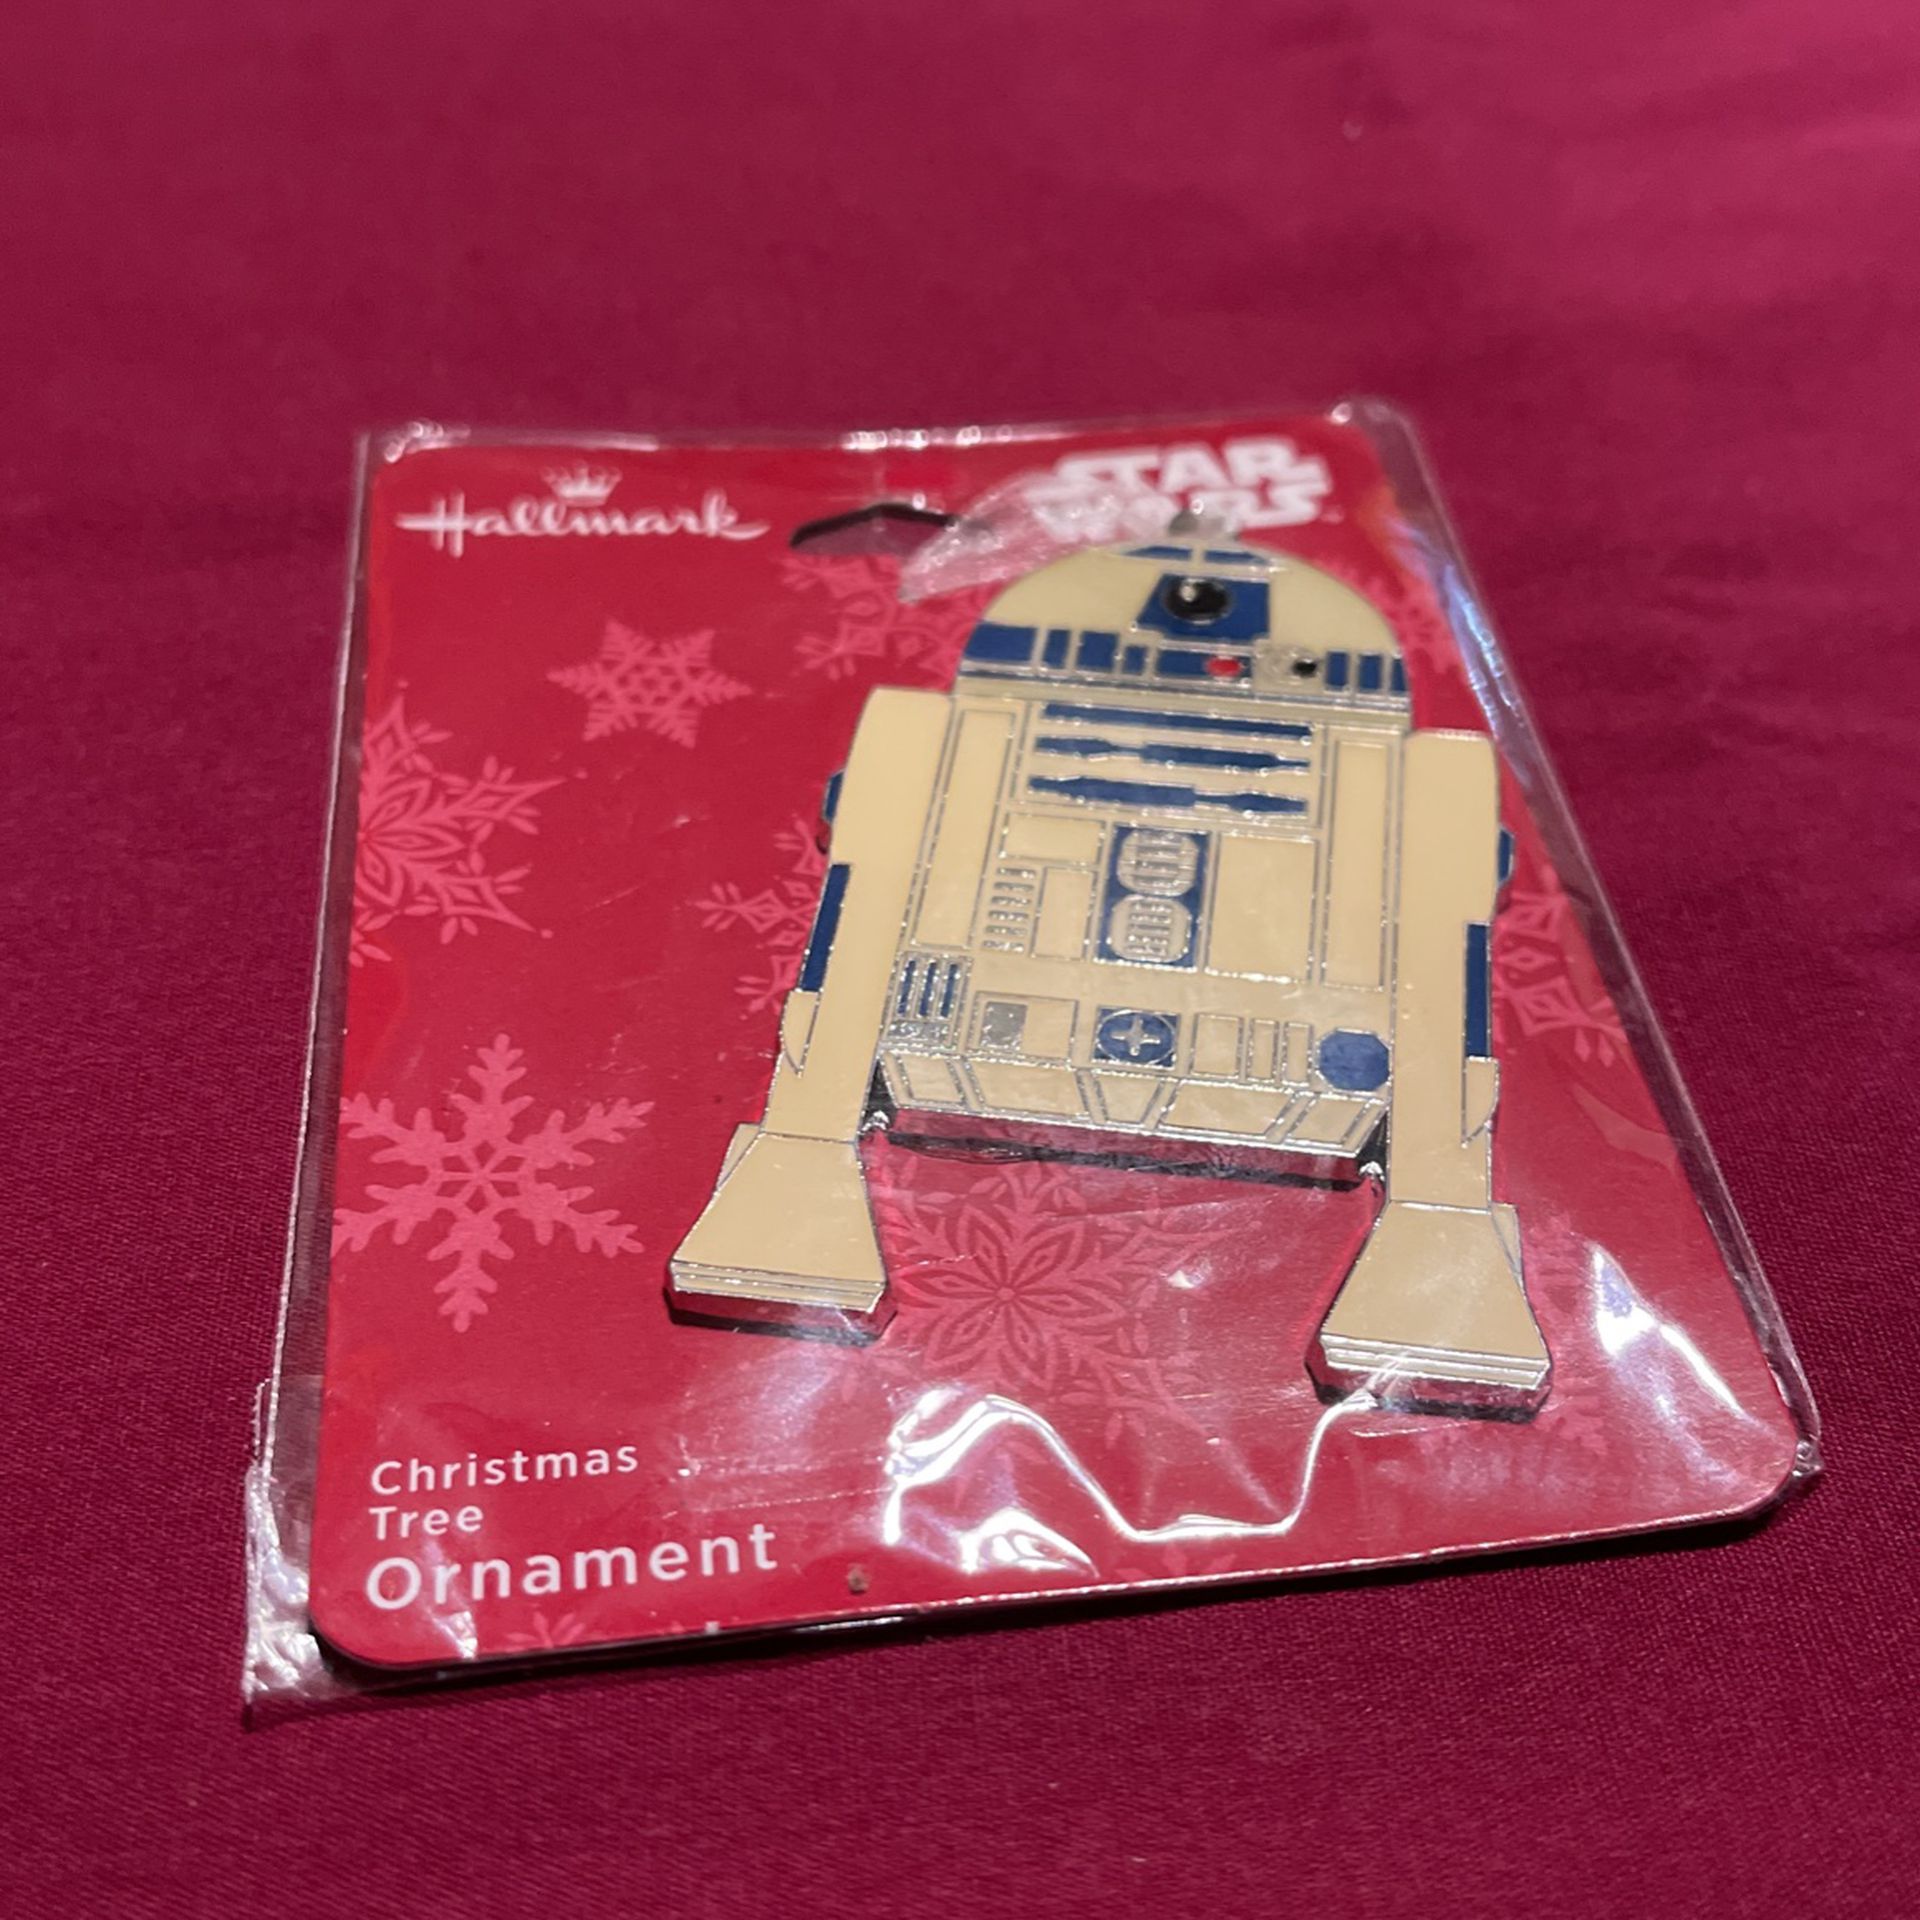 Star Wars R2-D2 Hallmark ornament. New in package, metal